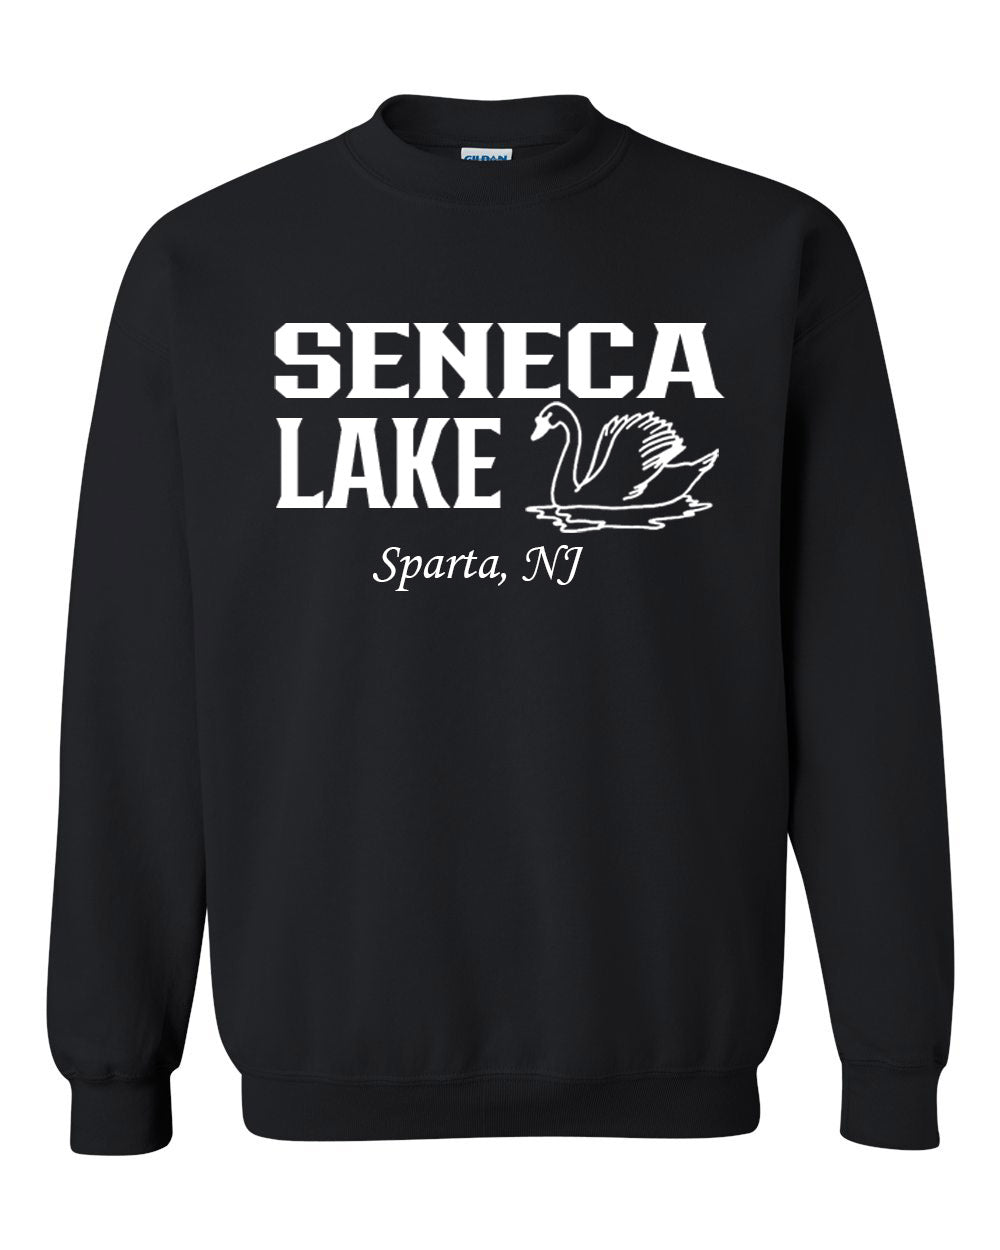 Seneca Lake Design 1 non hooded sweatshirt